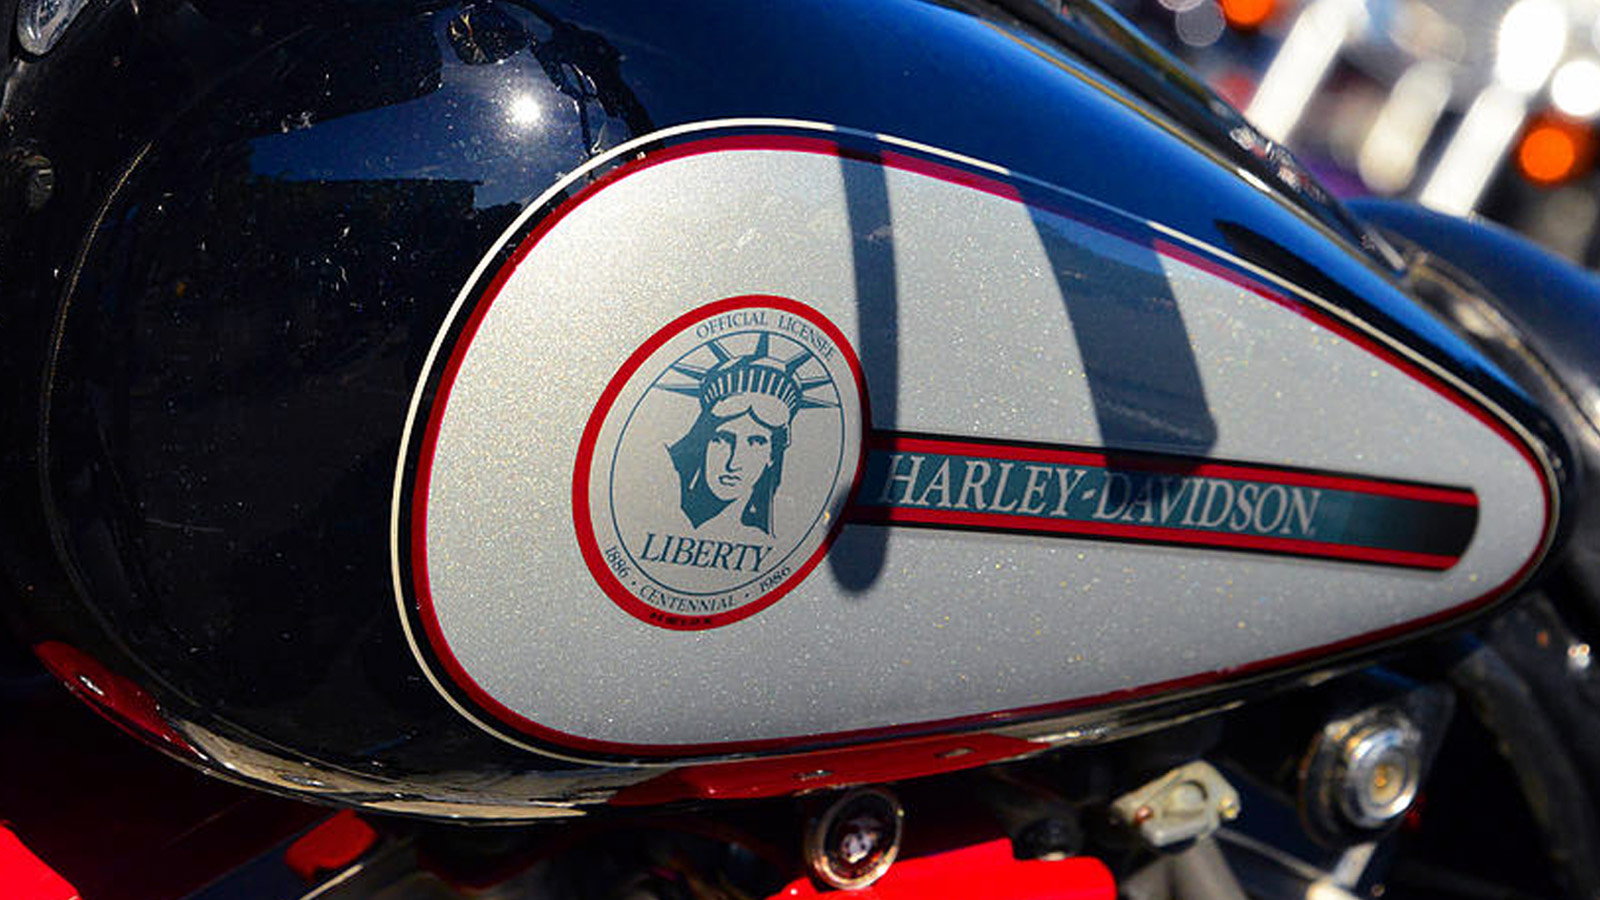 Nyc Harley Davidson Skyline Liberty Patch. – Harley Davidson Of Nyc